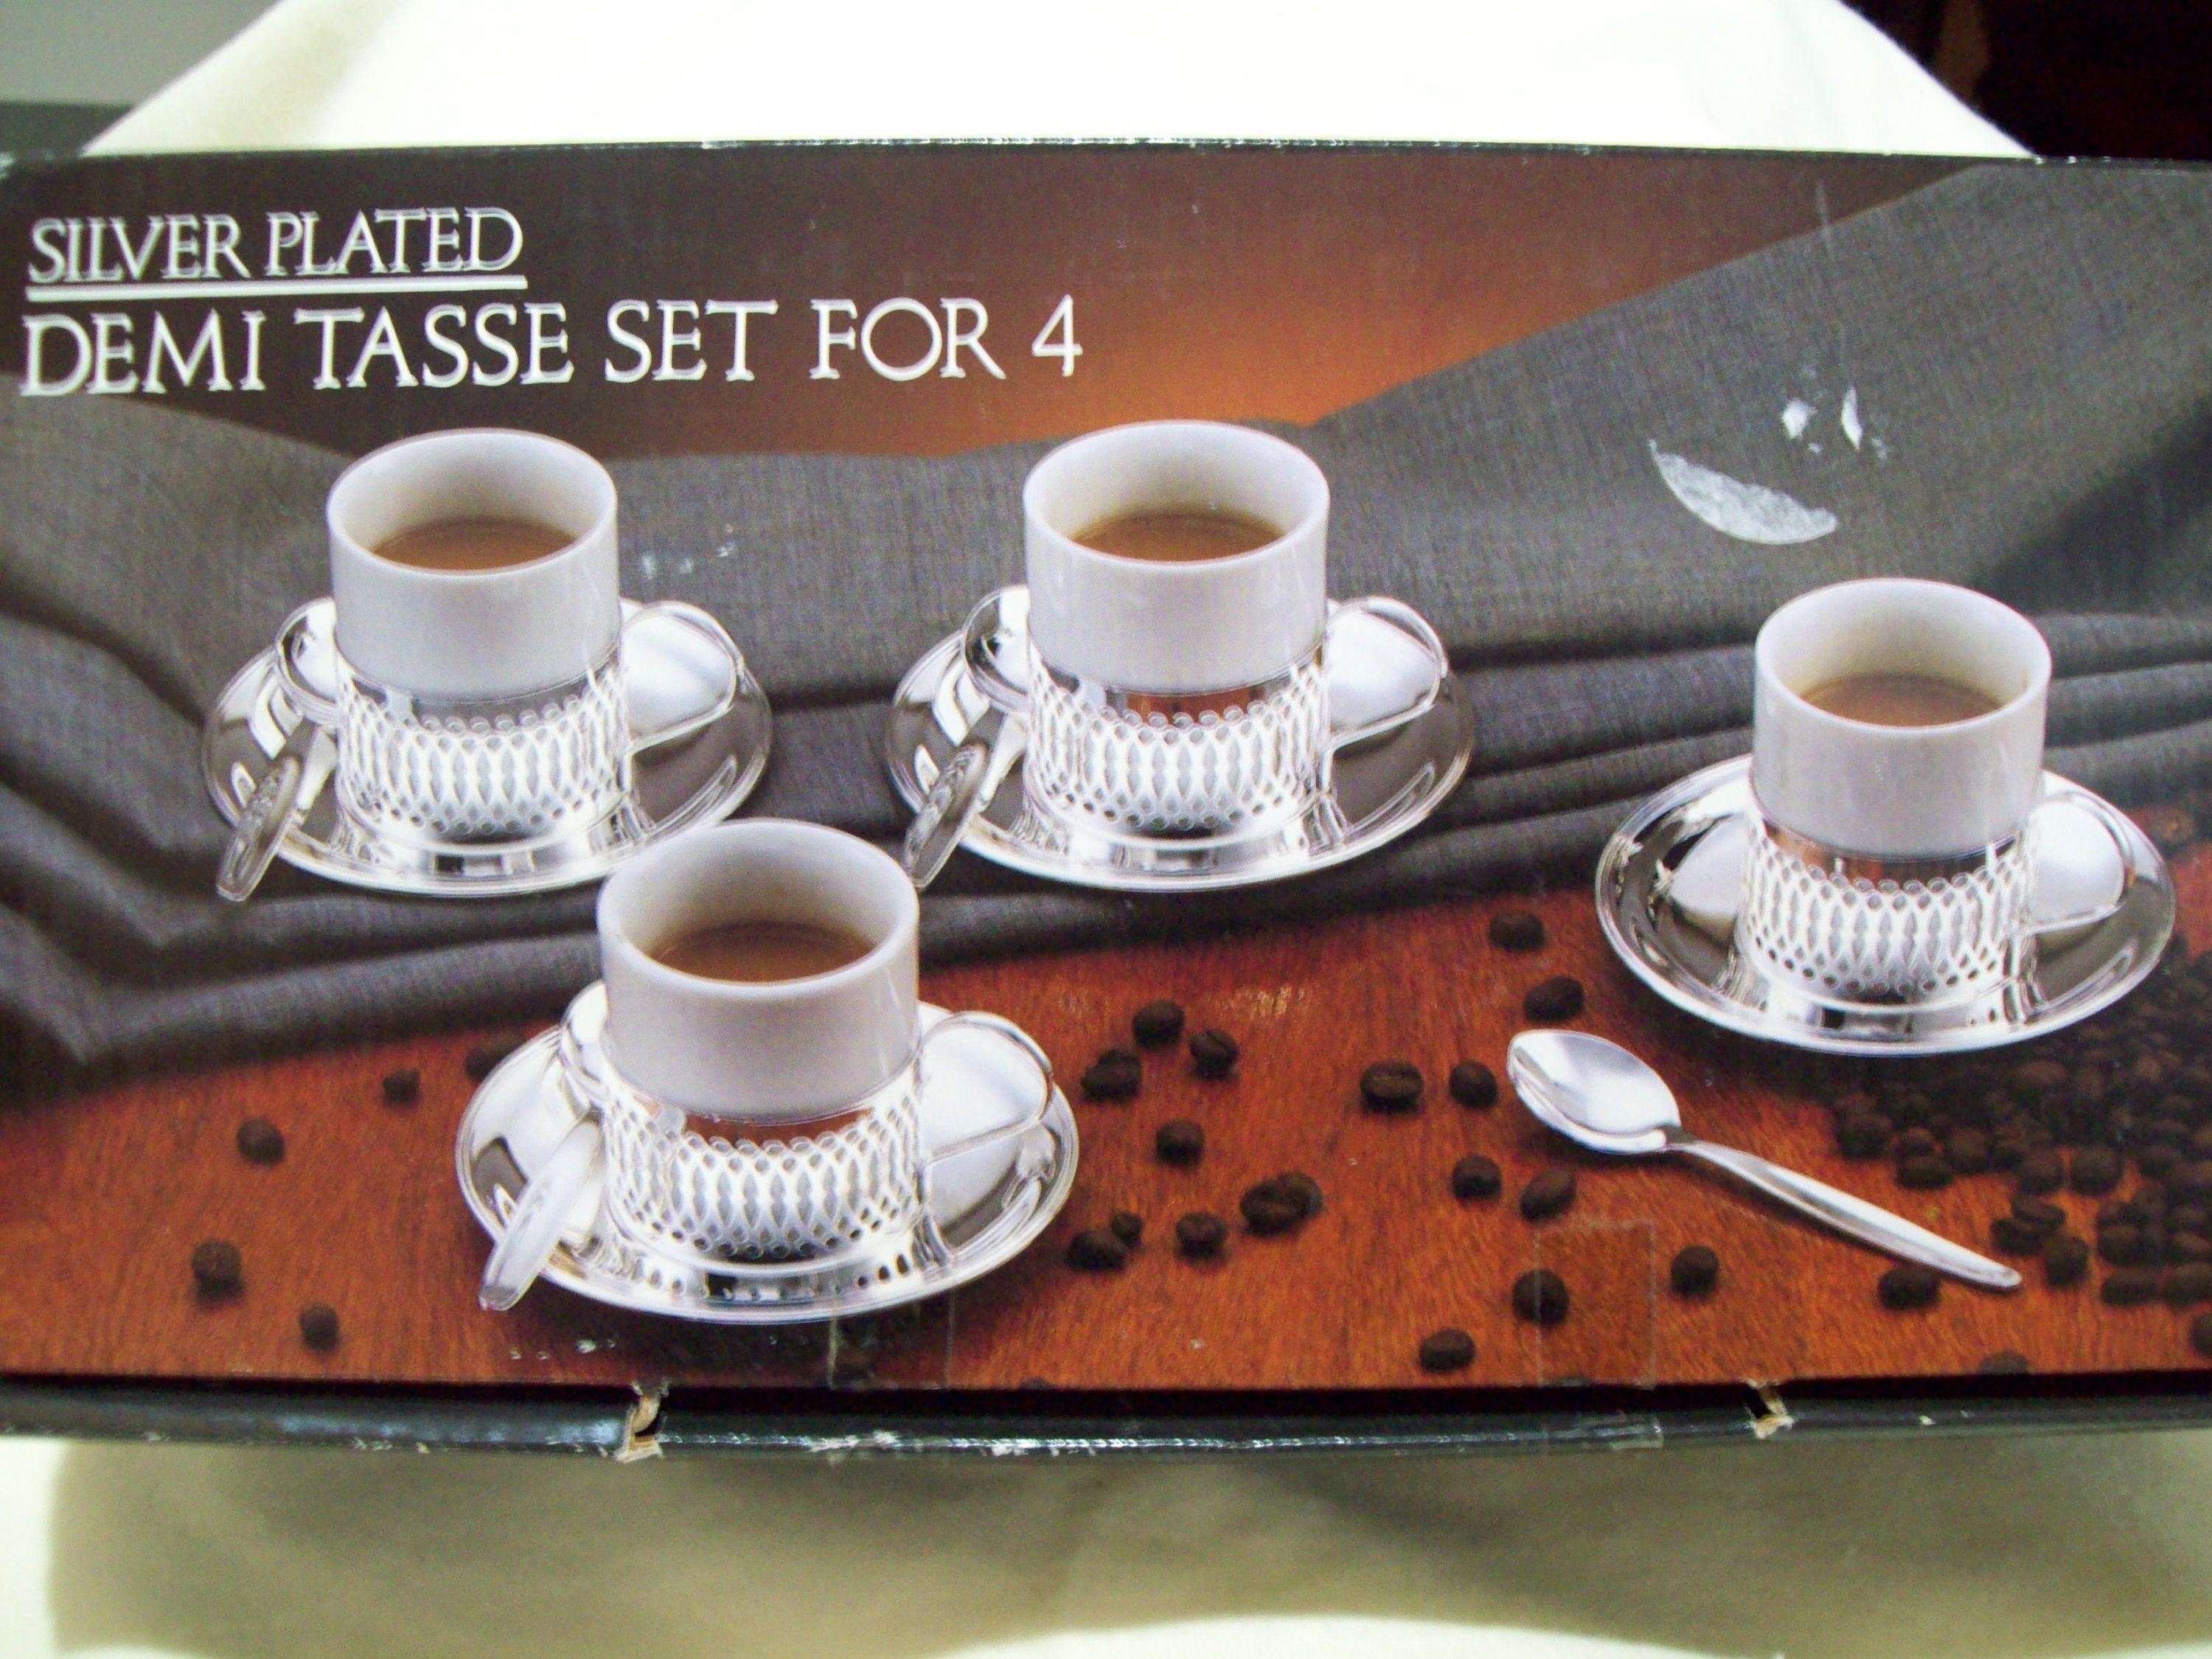 Claro Clear Espresso Mugs (Set of 4) Godinger Silver Art Co